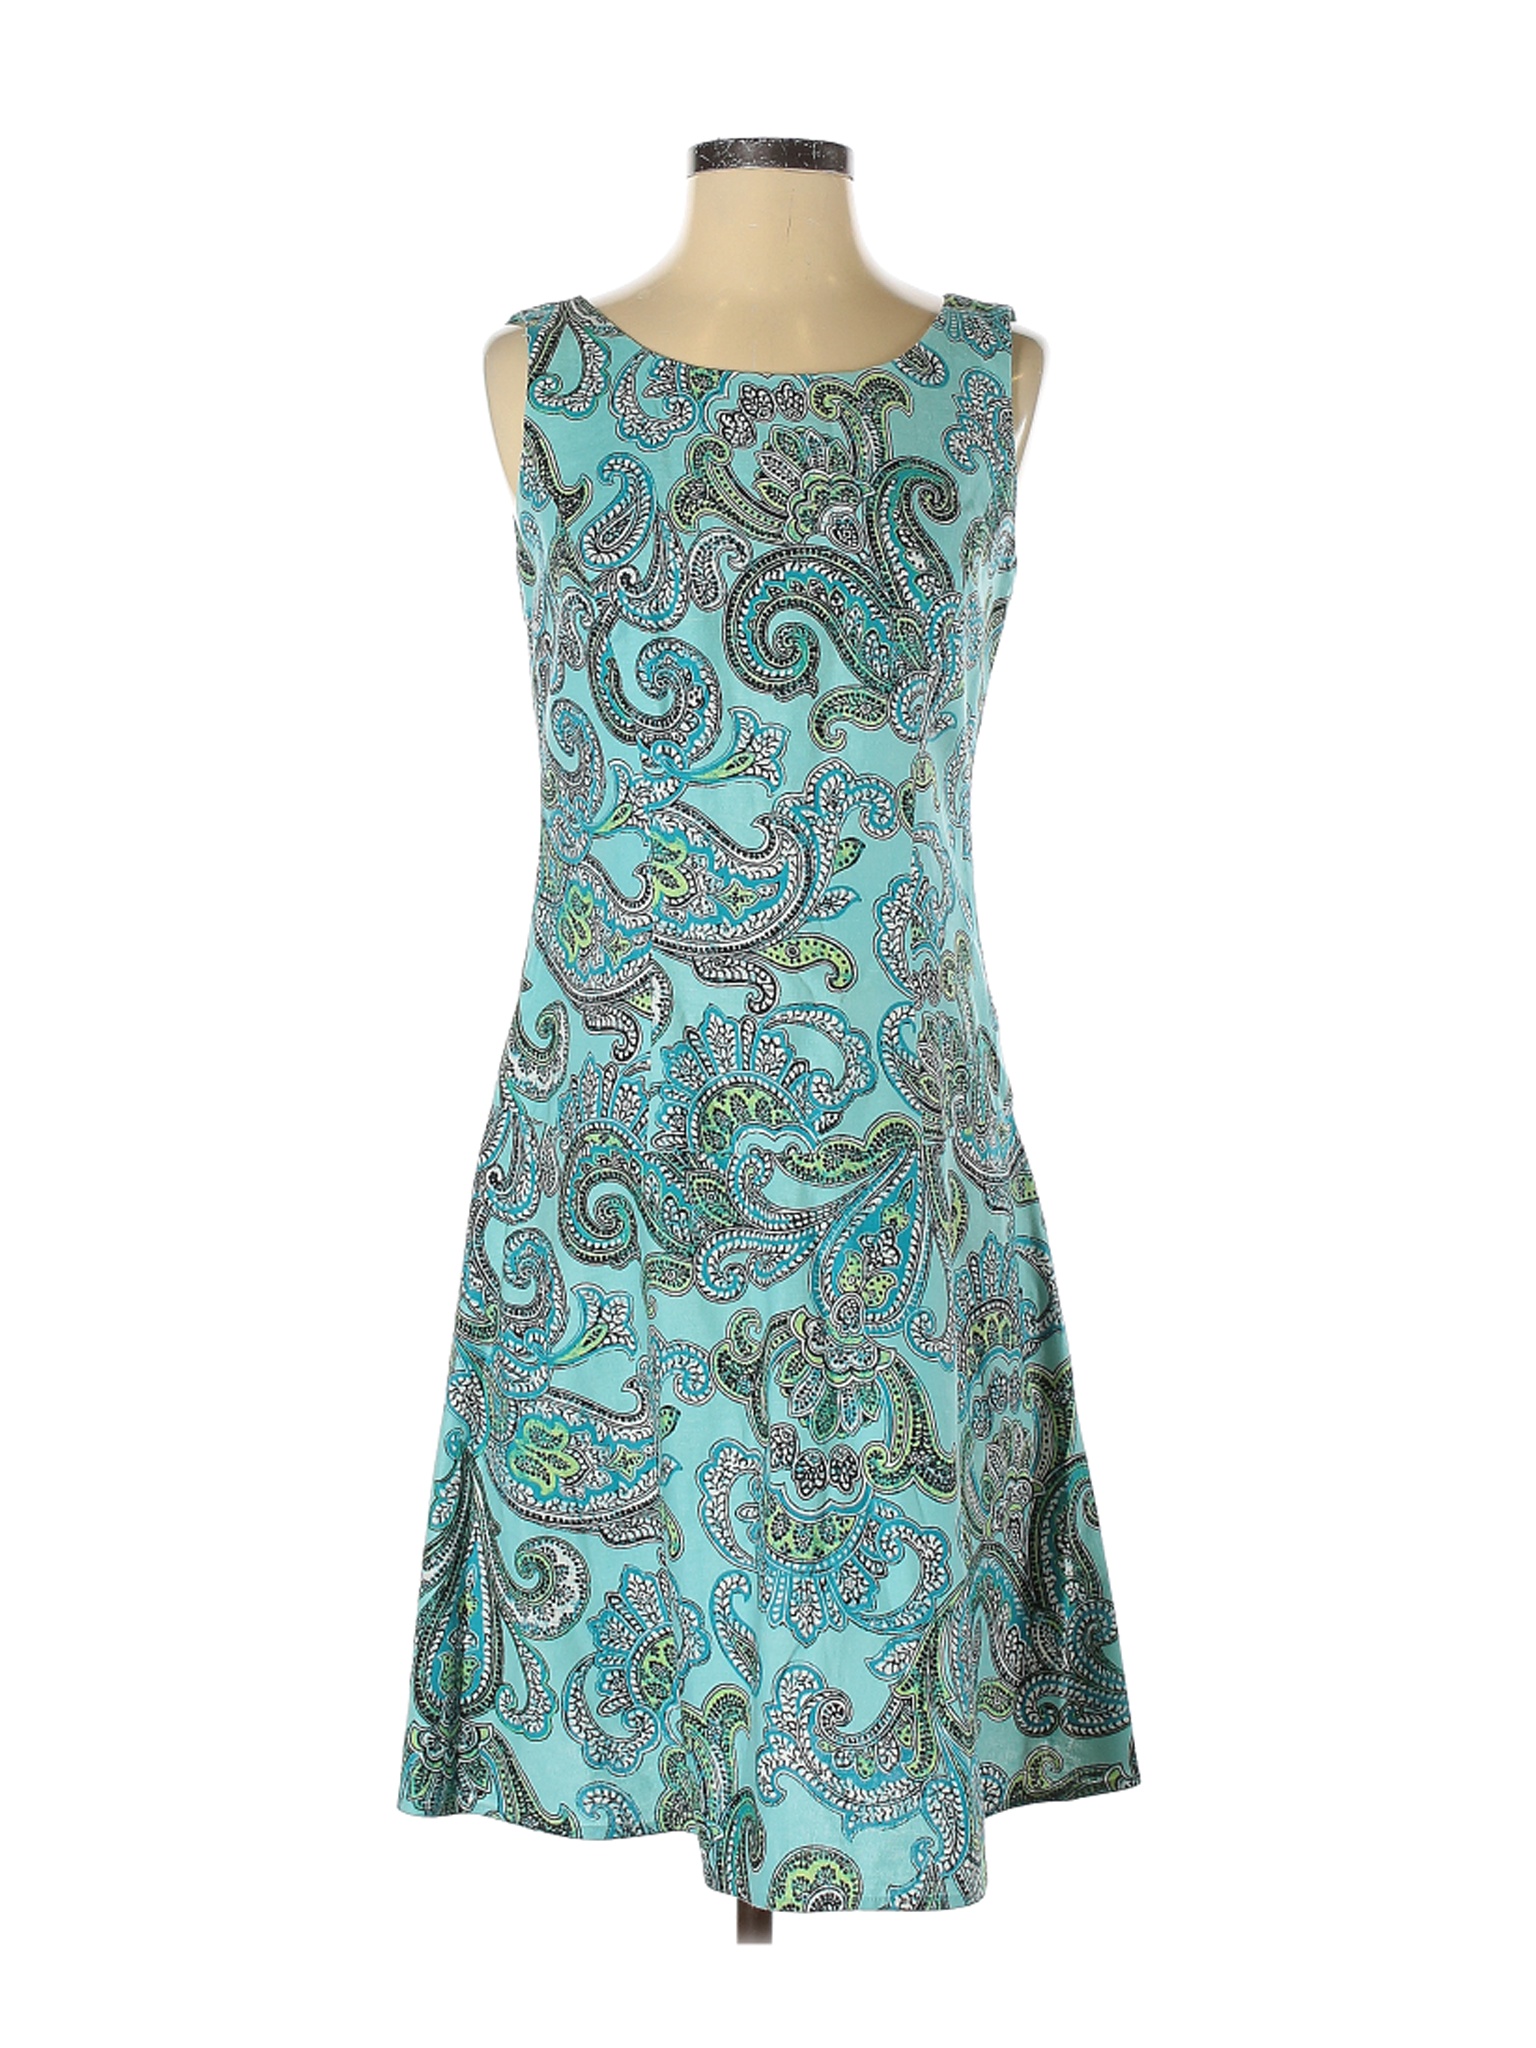 Brooks Brothers 346 Women Blue Casual Dress 2 | eBay